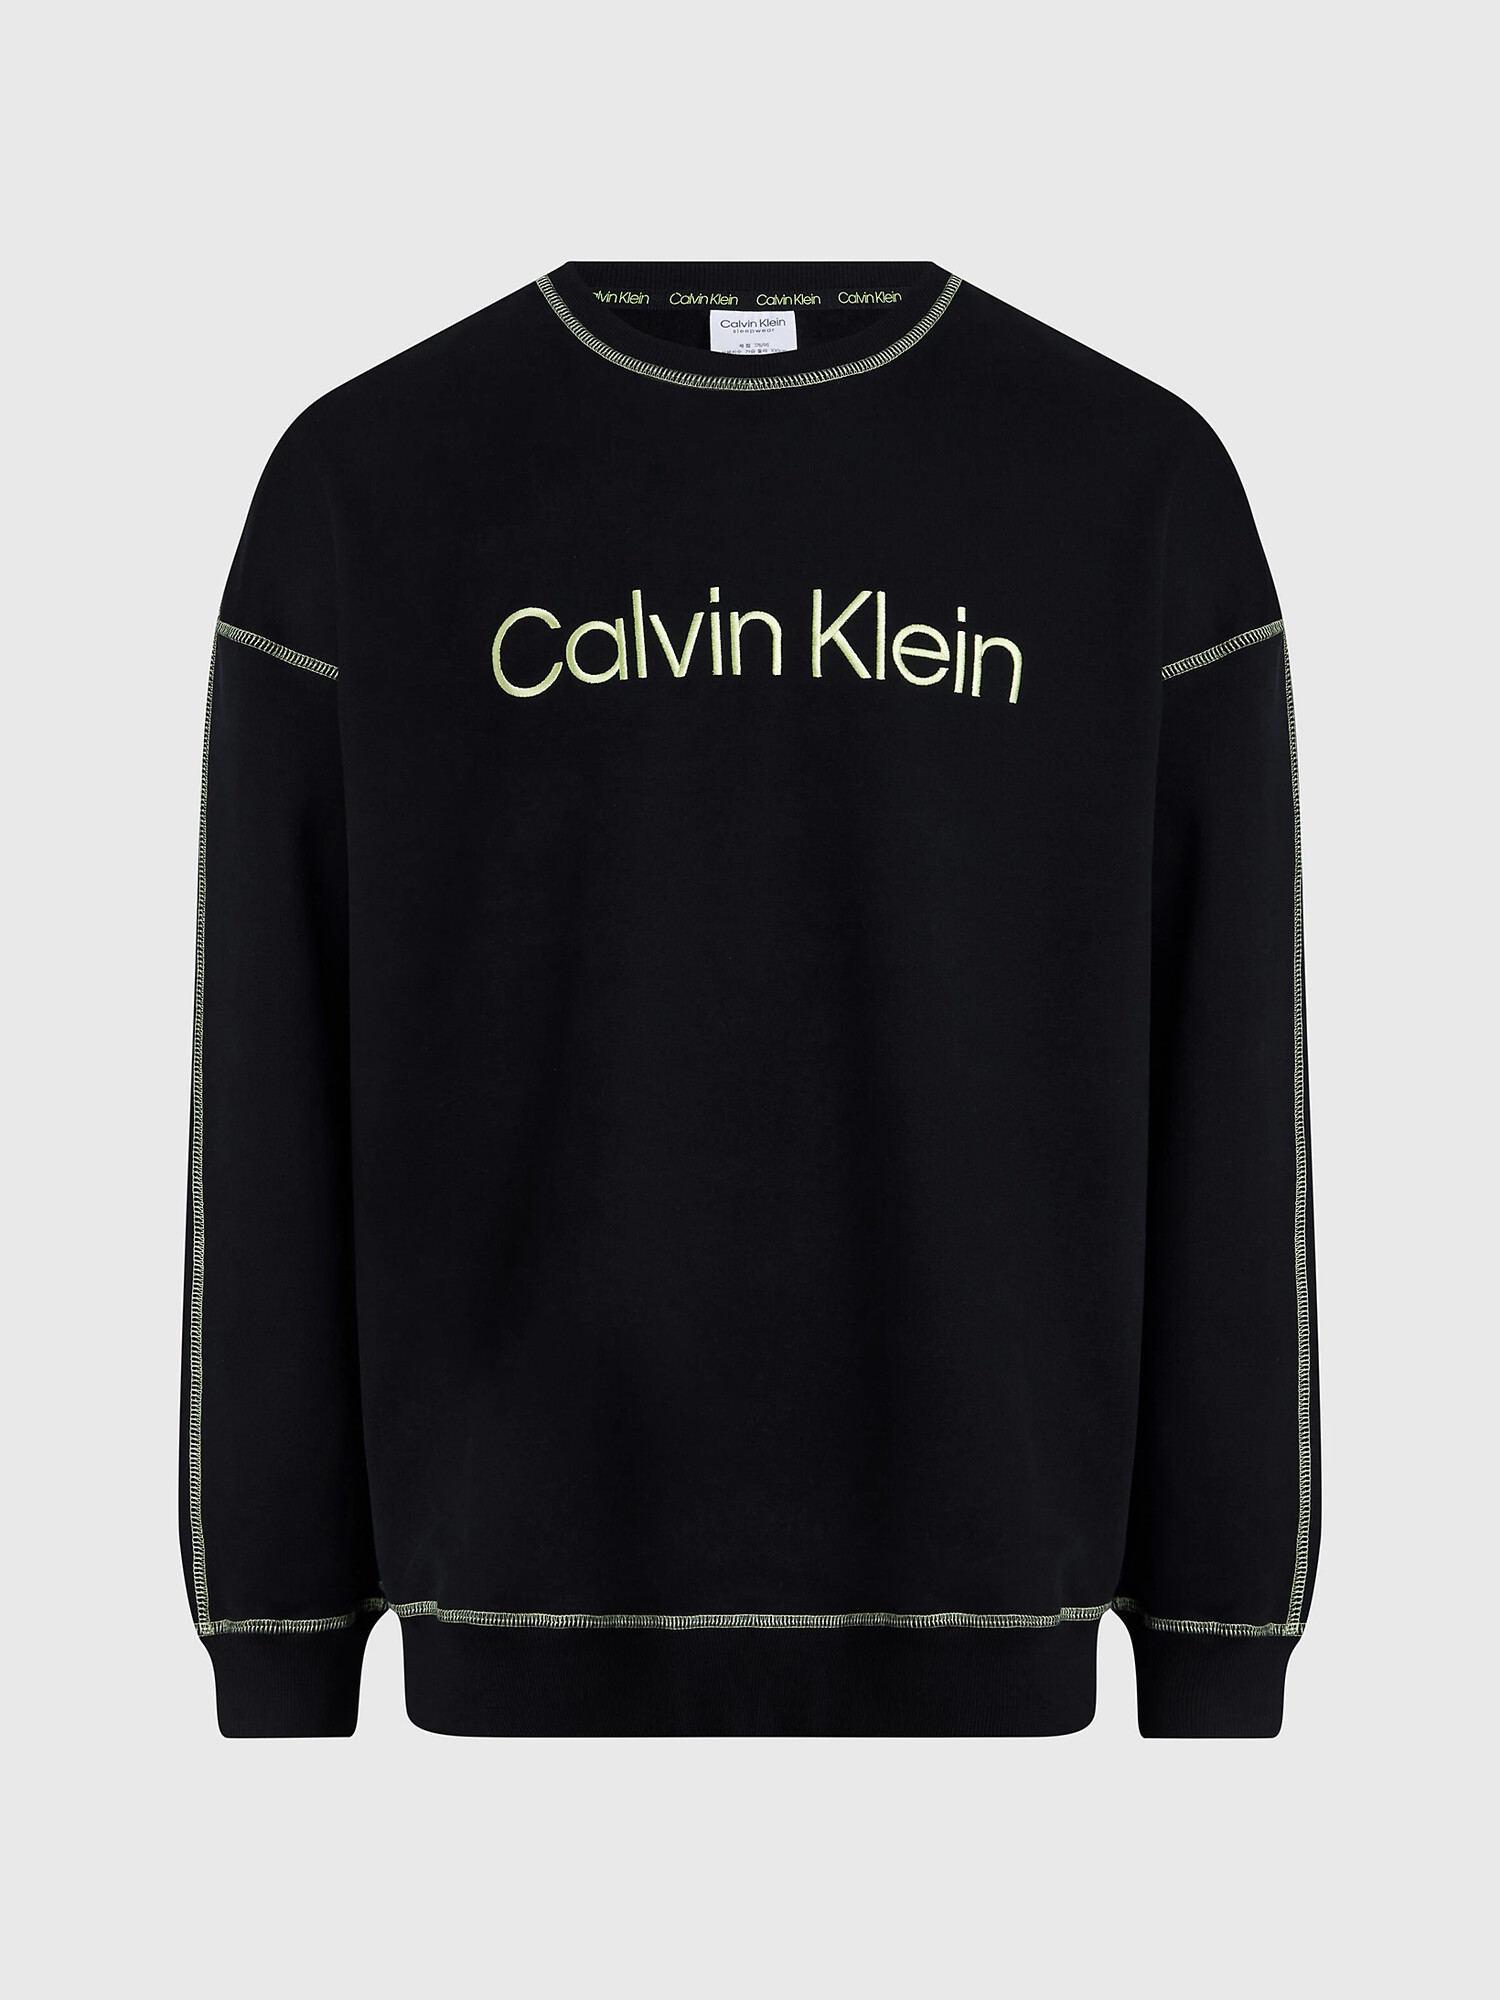 Pánská mikina NM2458E PET černá - Calvin Klein L